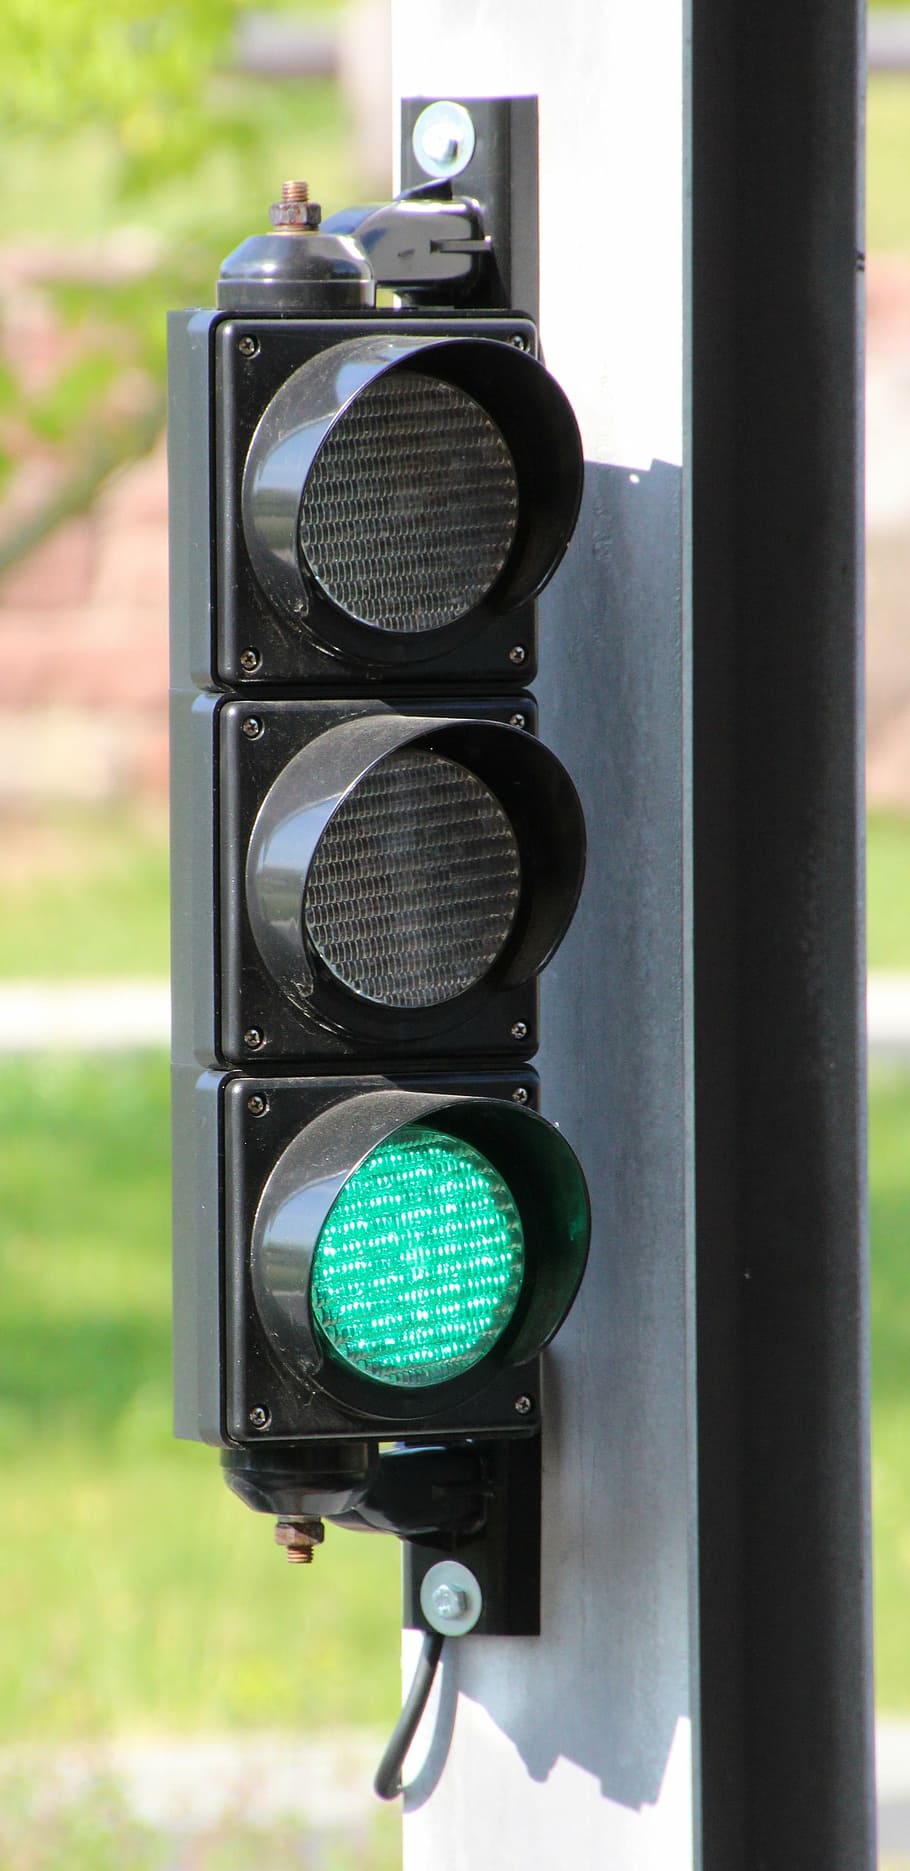 semáforos, verde, sinal luminoso, sinal verde, semáforo, luz, foco em primeiro plano, cor verde, dia, segurança